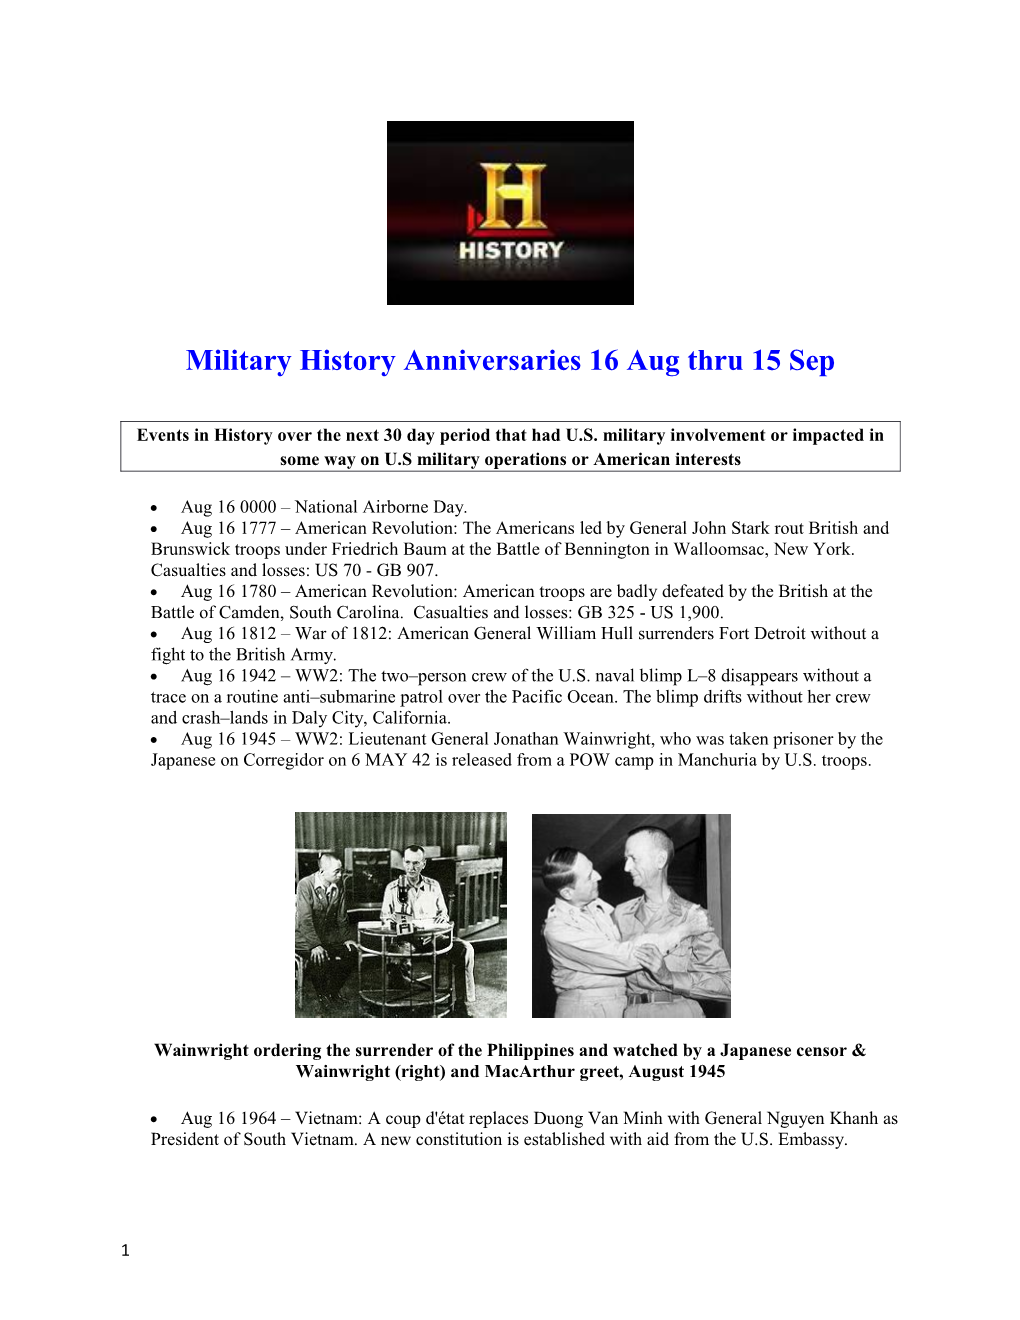 Military History Anniversaries16 Aug Thru15sep